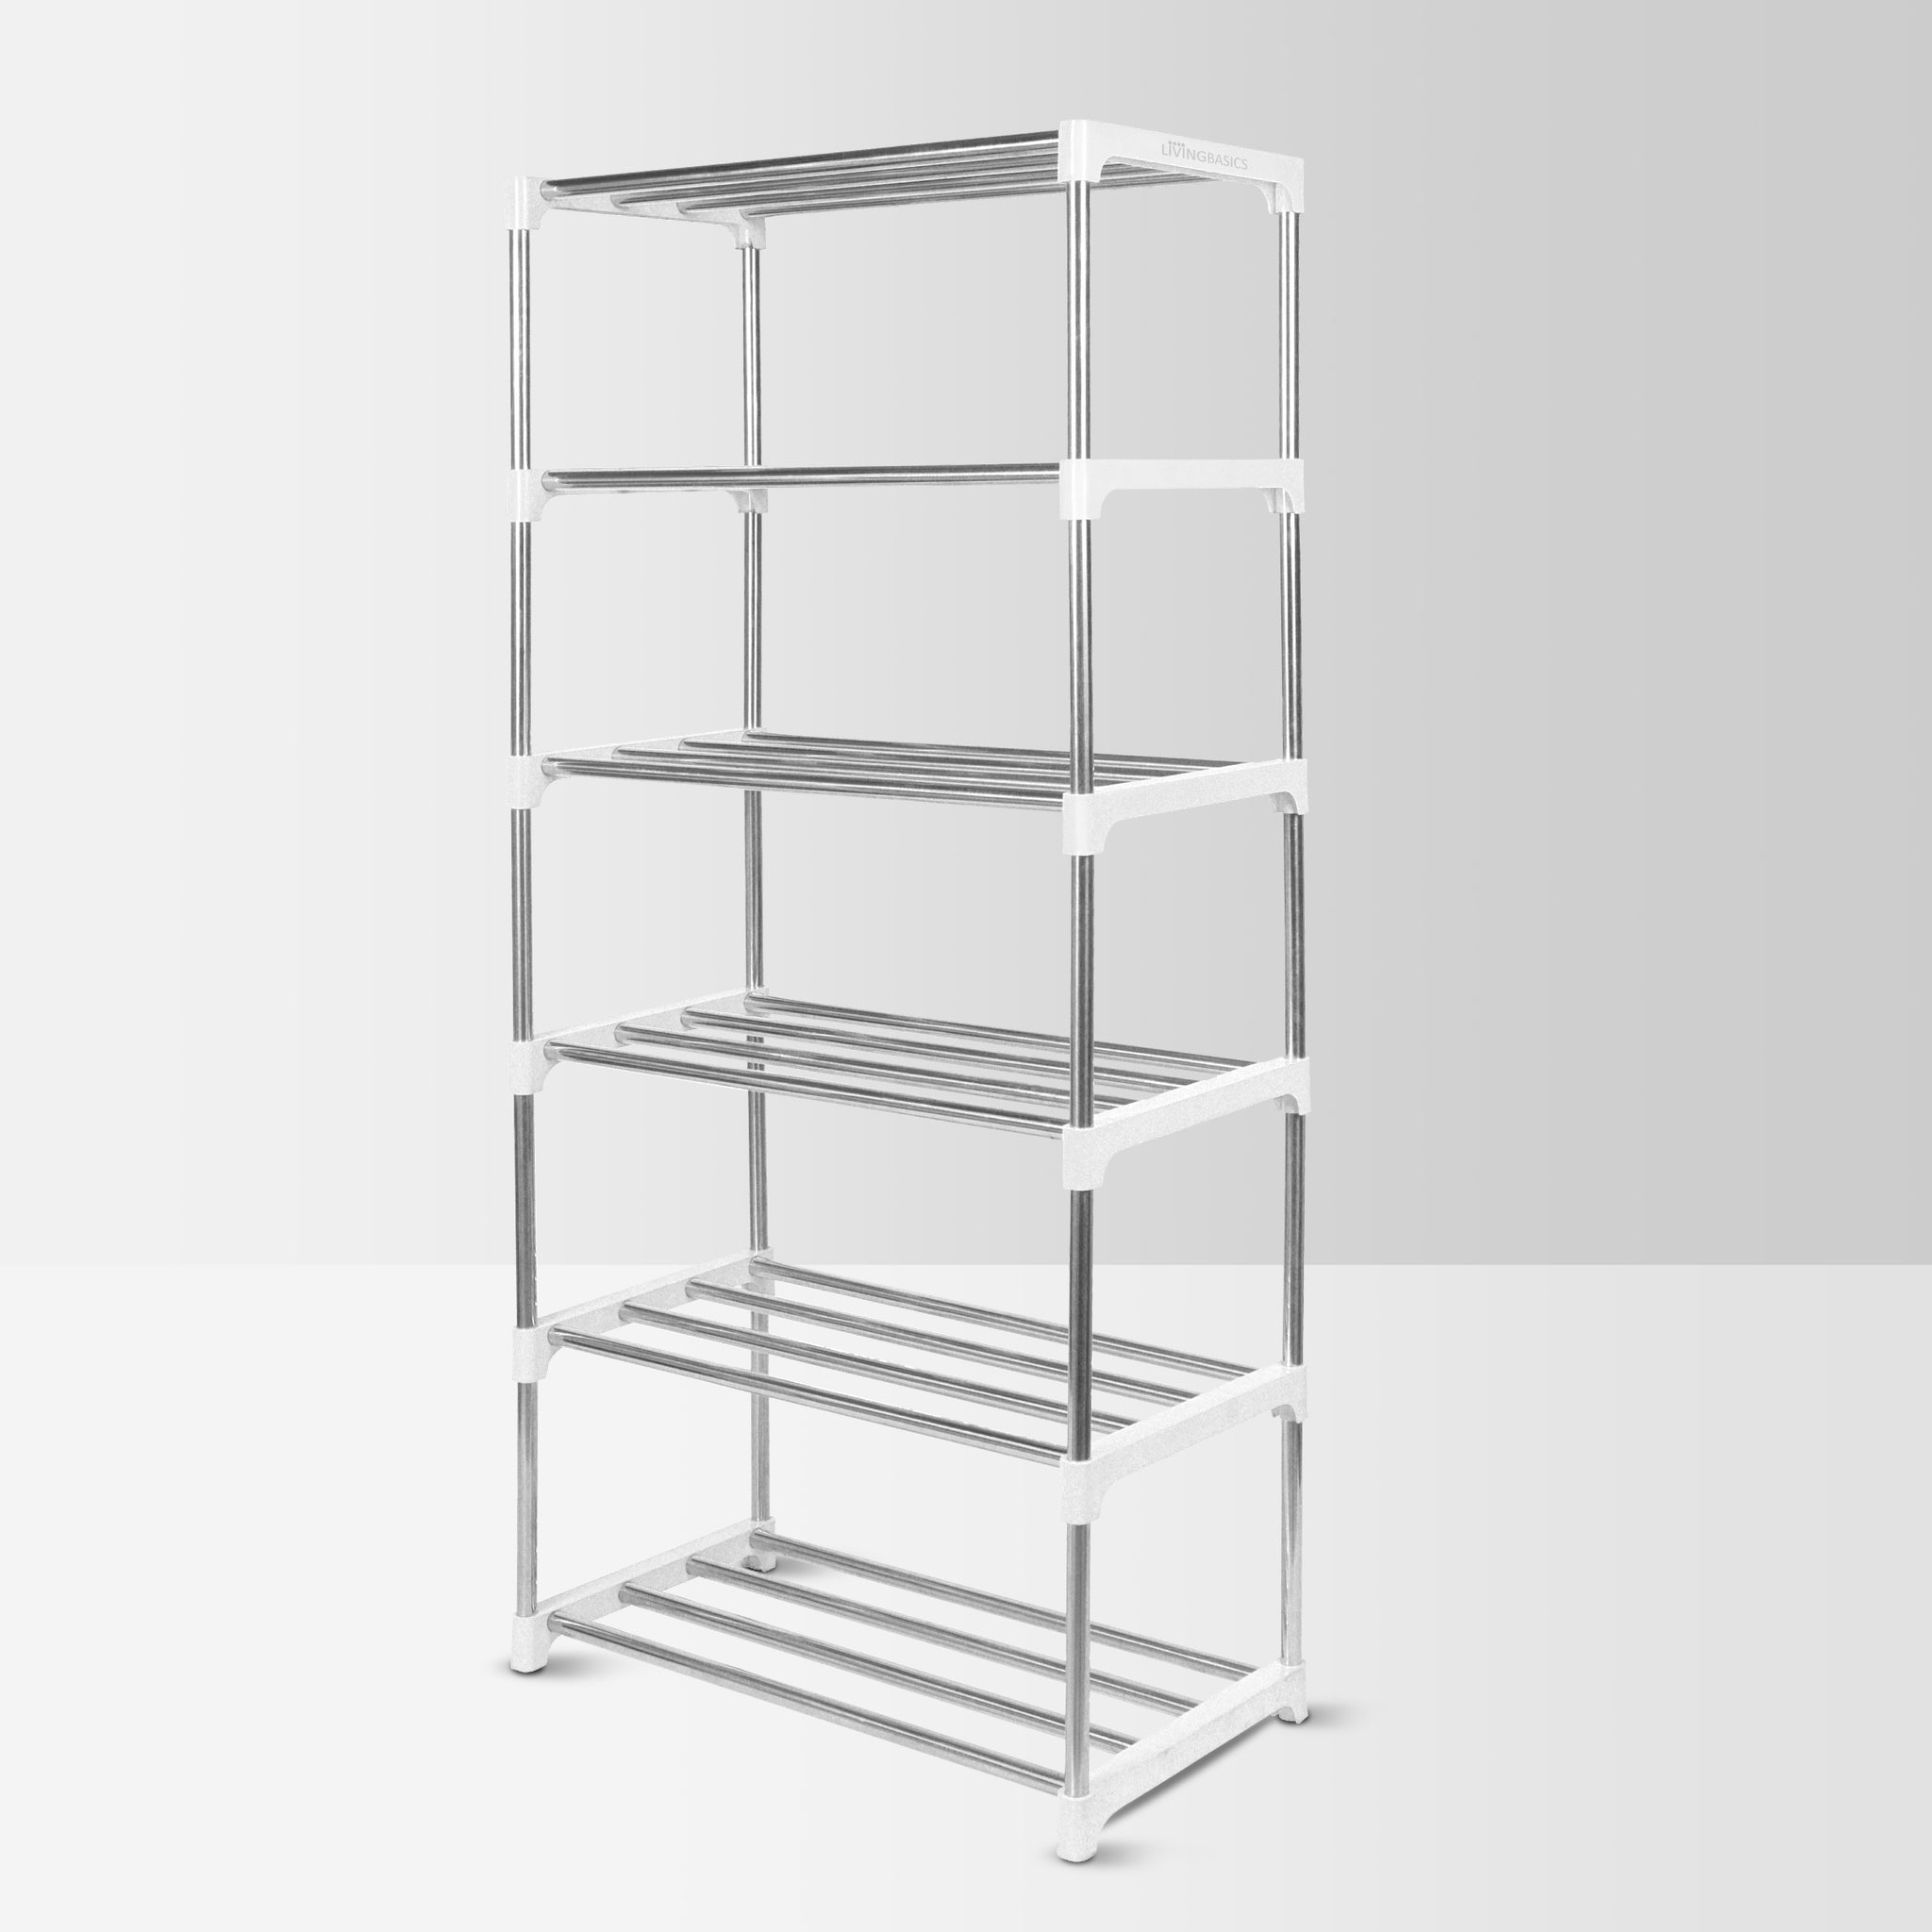 LIVINGBASICS Stainless Steel Multifunctional/Multipurpose Storage Shelves/Rack/Stand for Home/Office/Kitchen/Balcony/Bathroom/Study Room